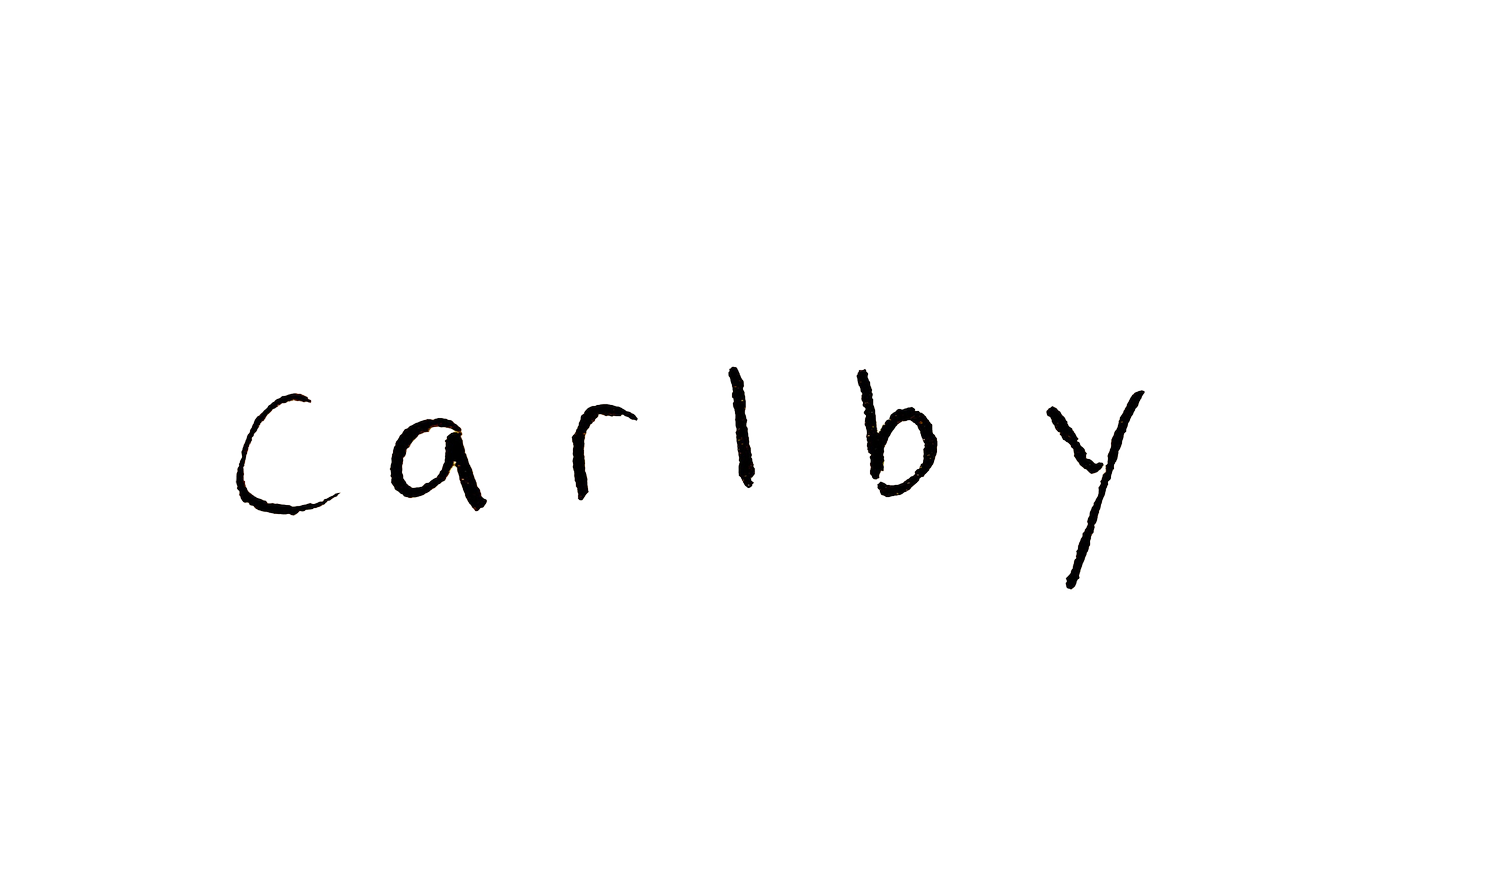 Carlby